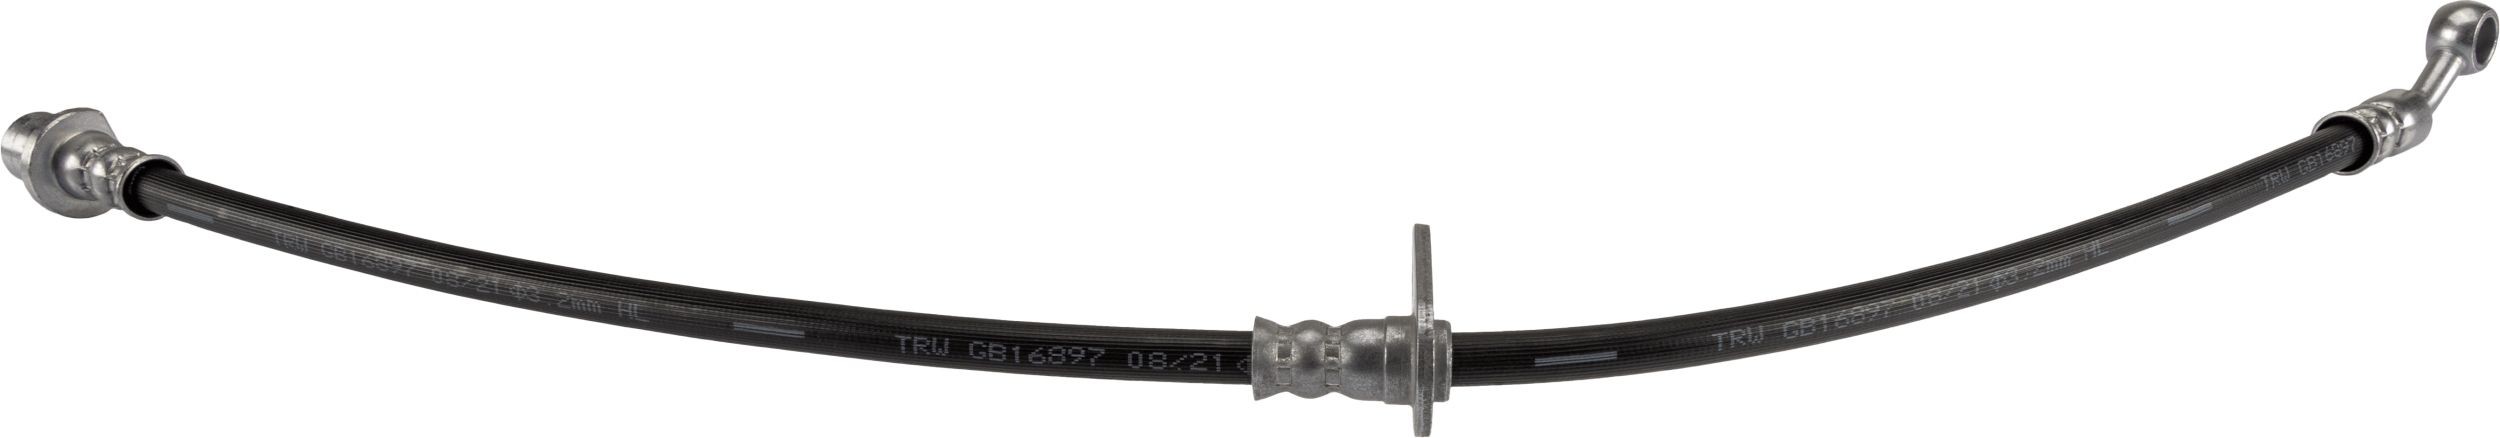 TRW 575 mm, M10x1, Internal Thread Length: 575mm, Thread Size 1: M10x1, Thread Size 2: Banjo Brake line PHD463 buy